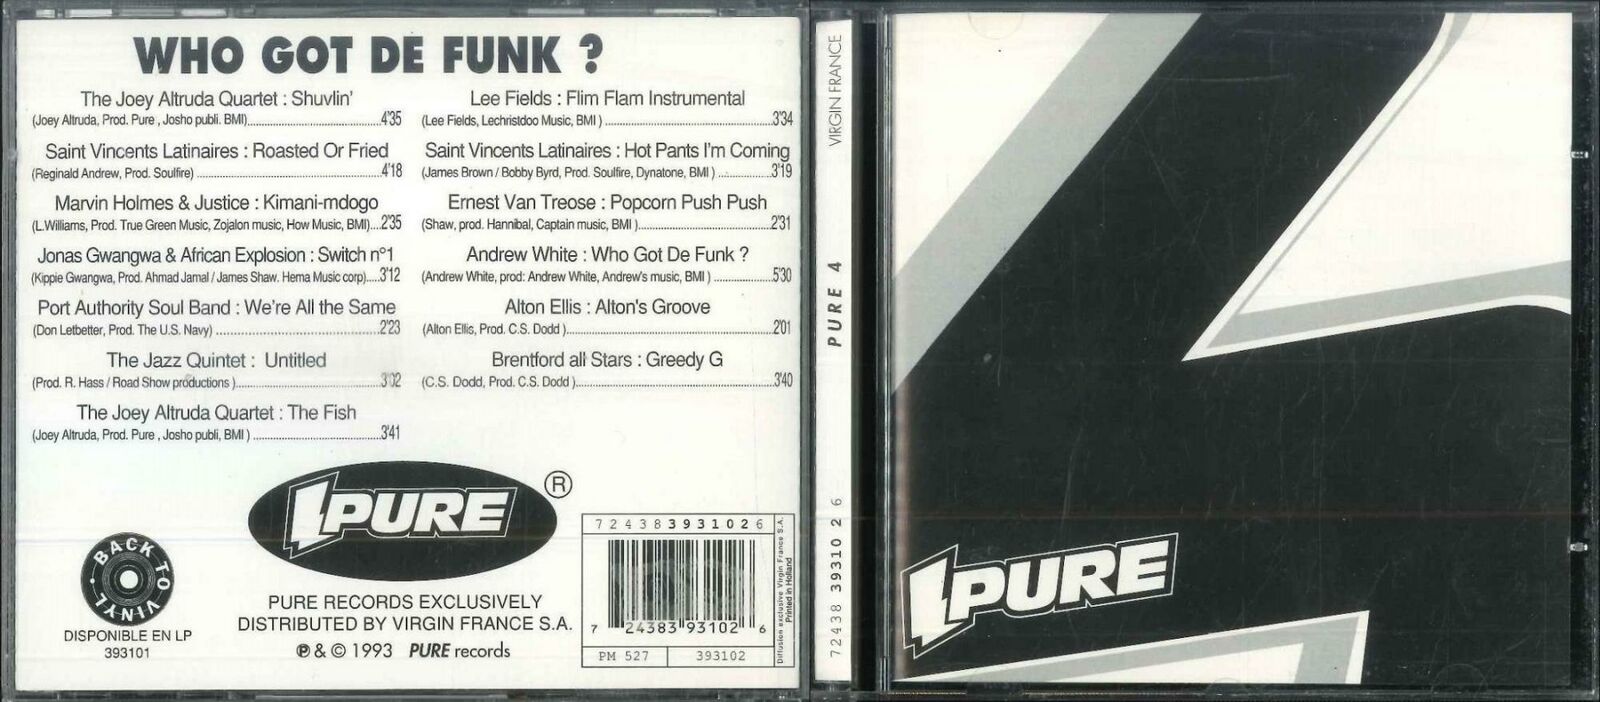 The Joey Altruda Quartet, Marvin Holmes & Justice, Lee Fields, etc - Pure 4 (Who Got De Funk ?) - Virgin 393102 France CD